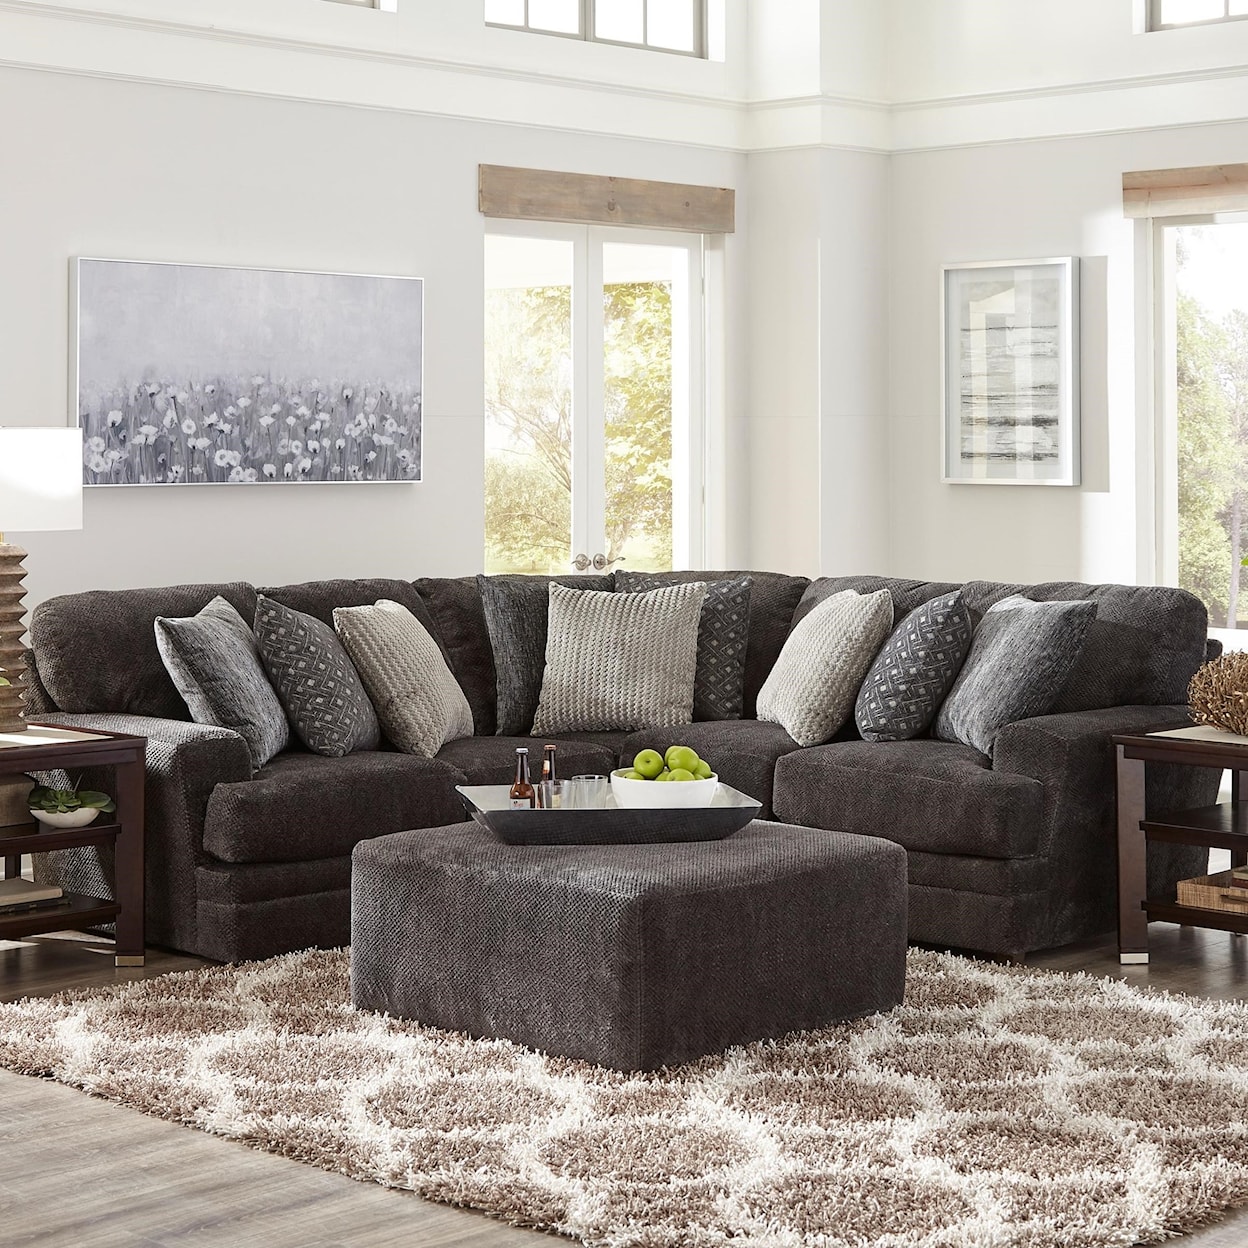 Jackson Furniture 4376 Mammoth Stationary Living Room Group